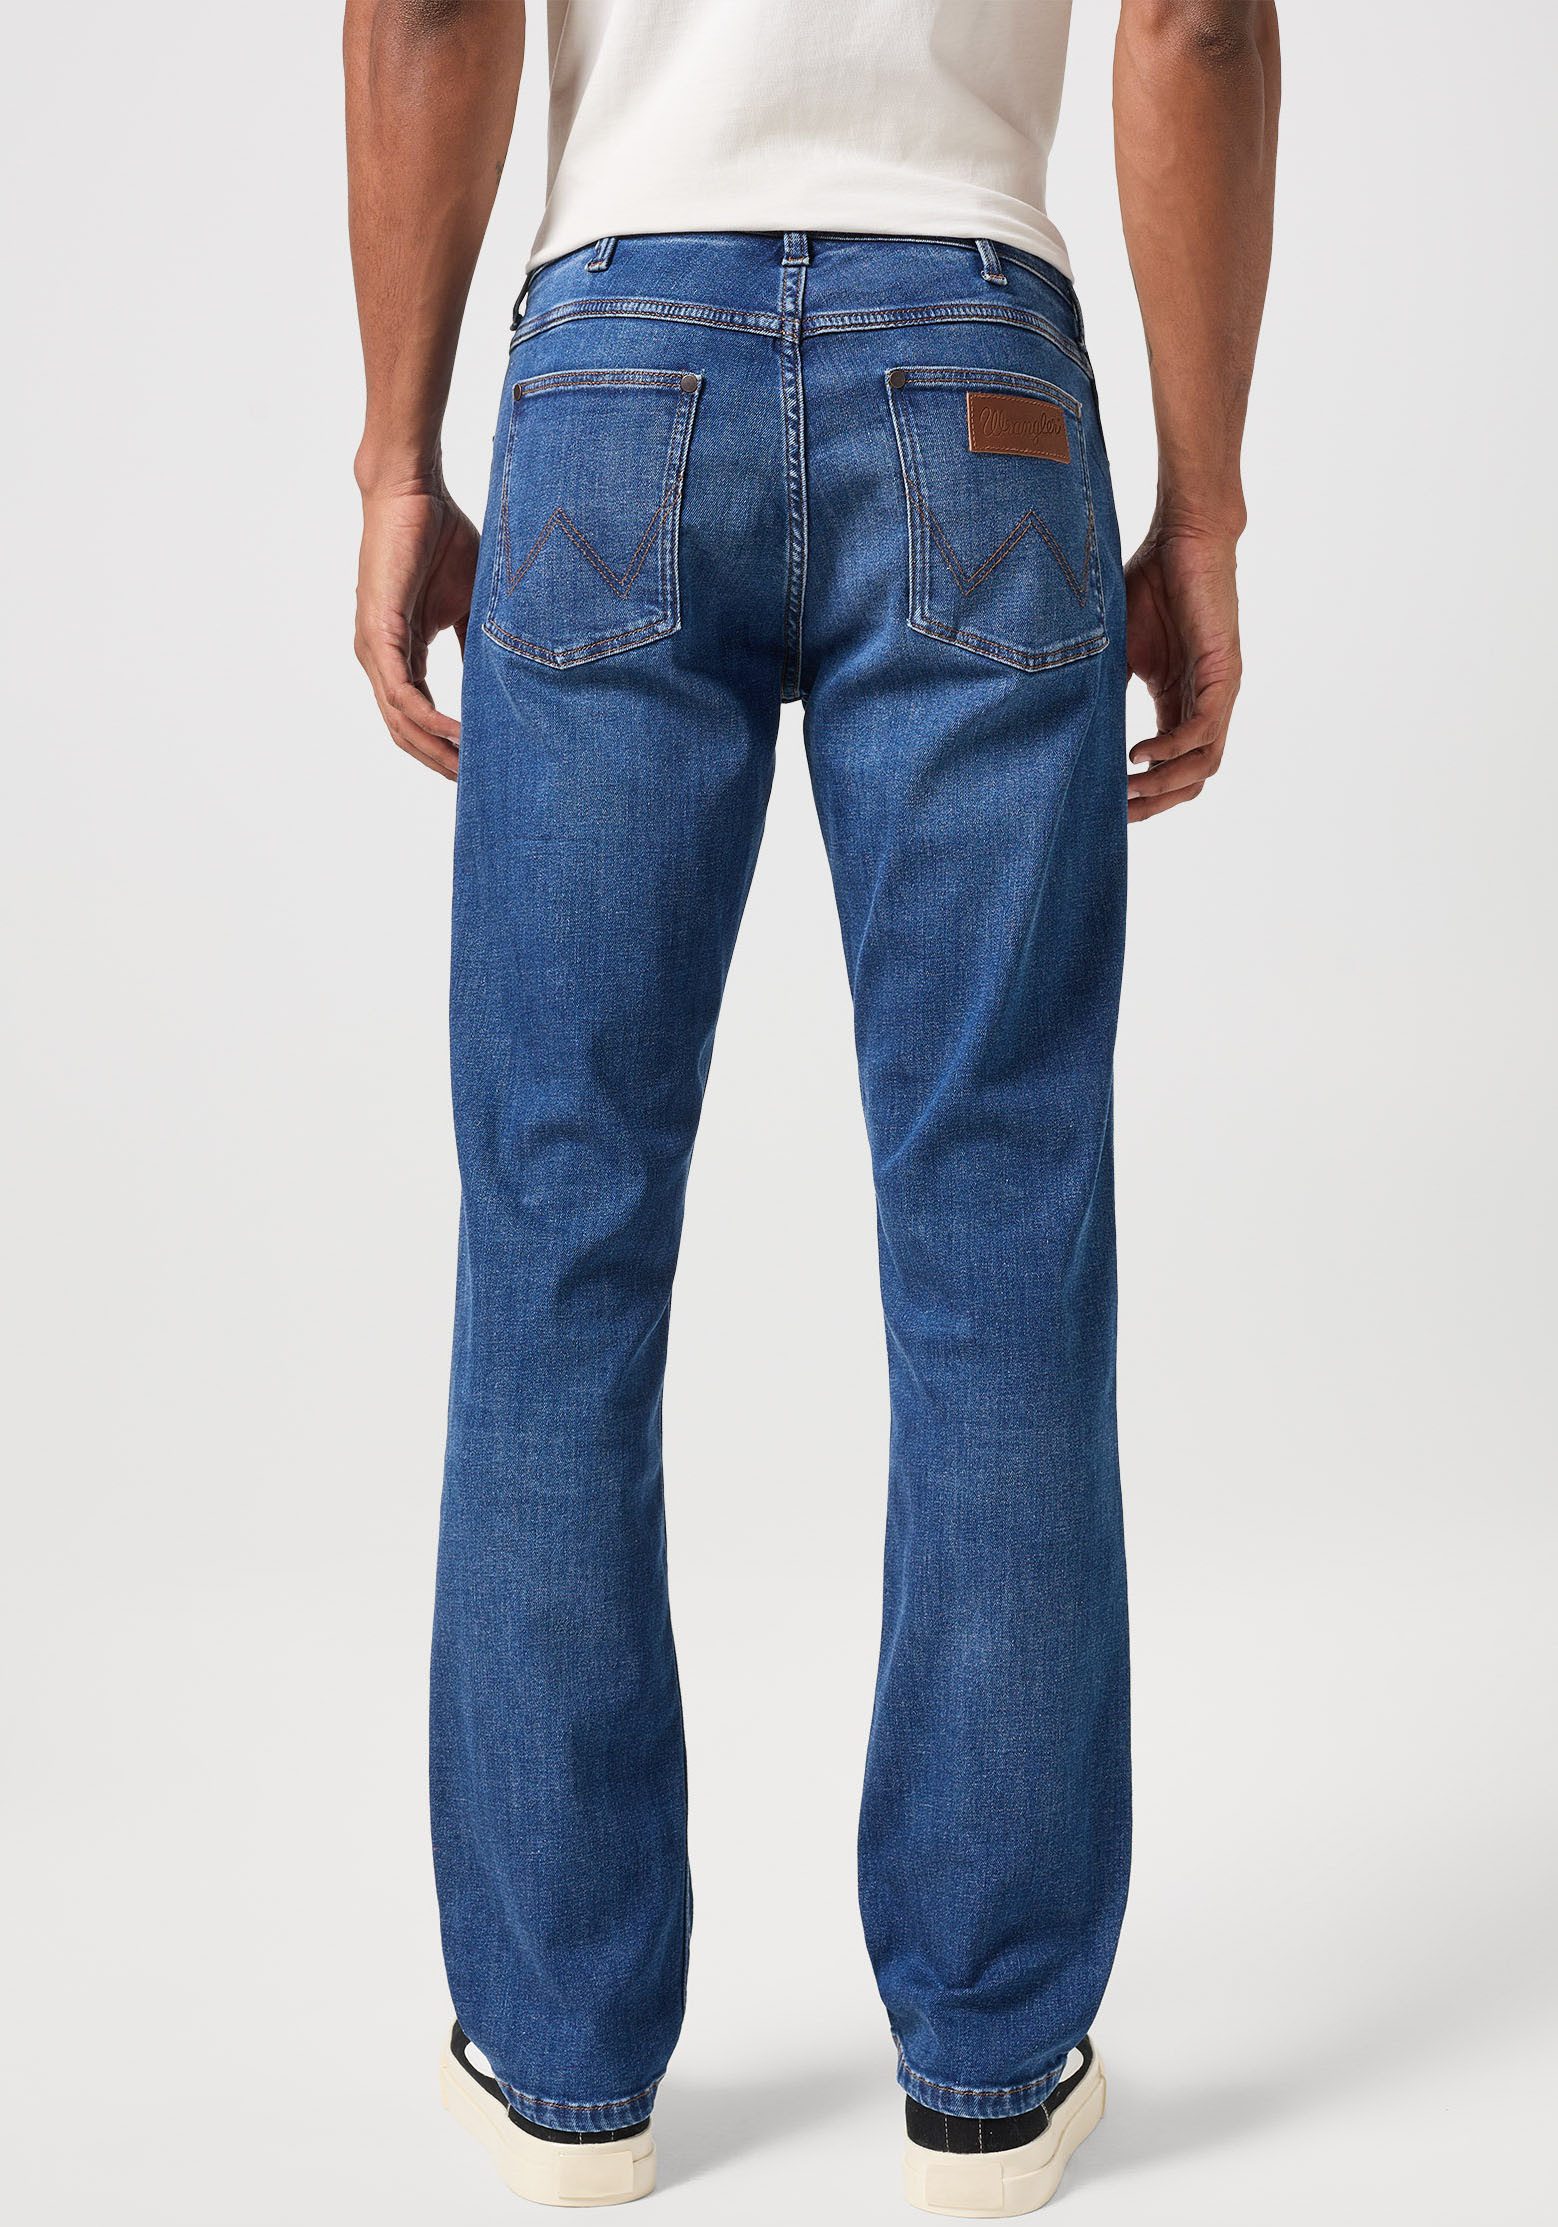 Wrangler 5-pocket jeans Greensboro Regular fit